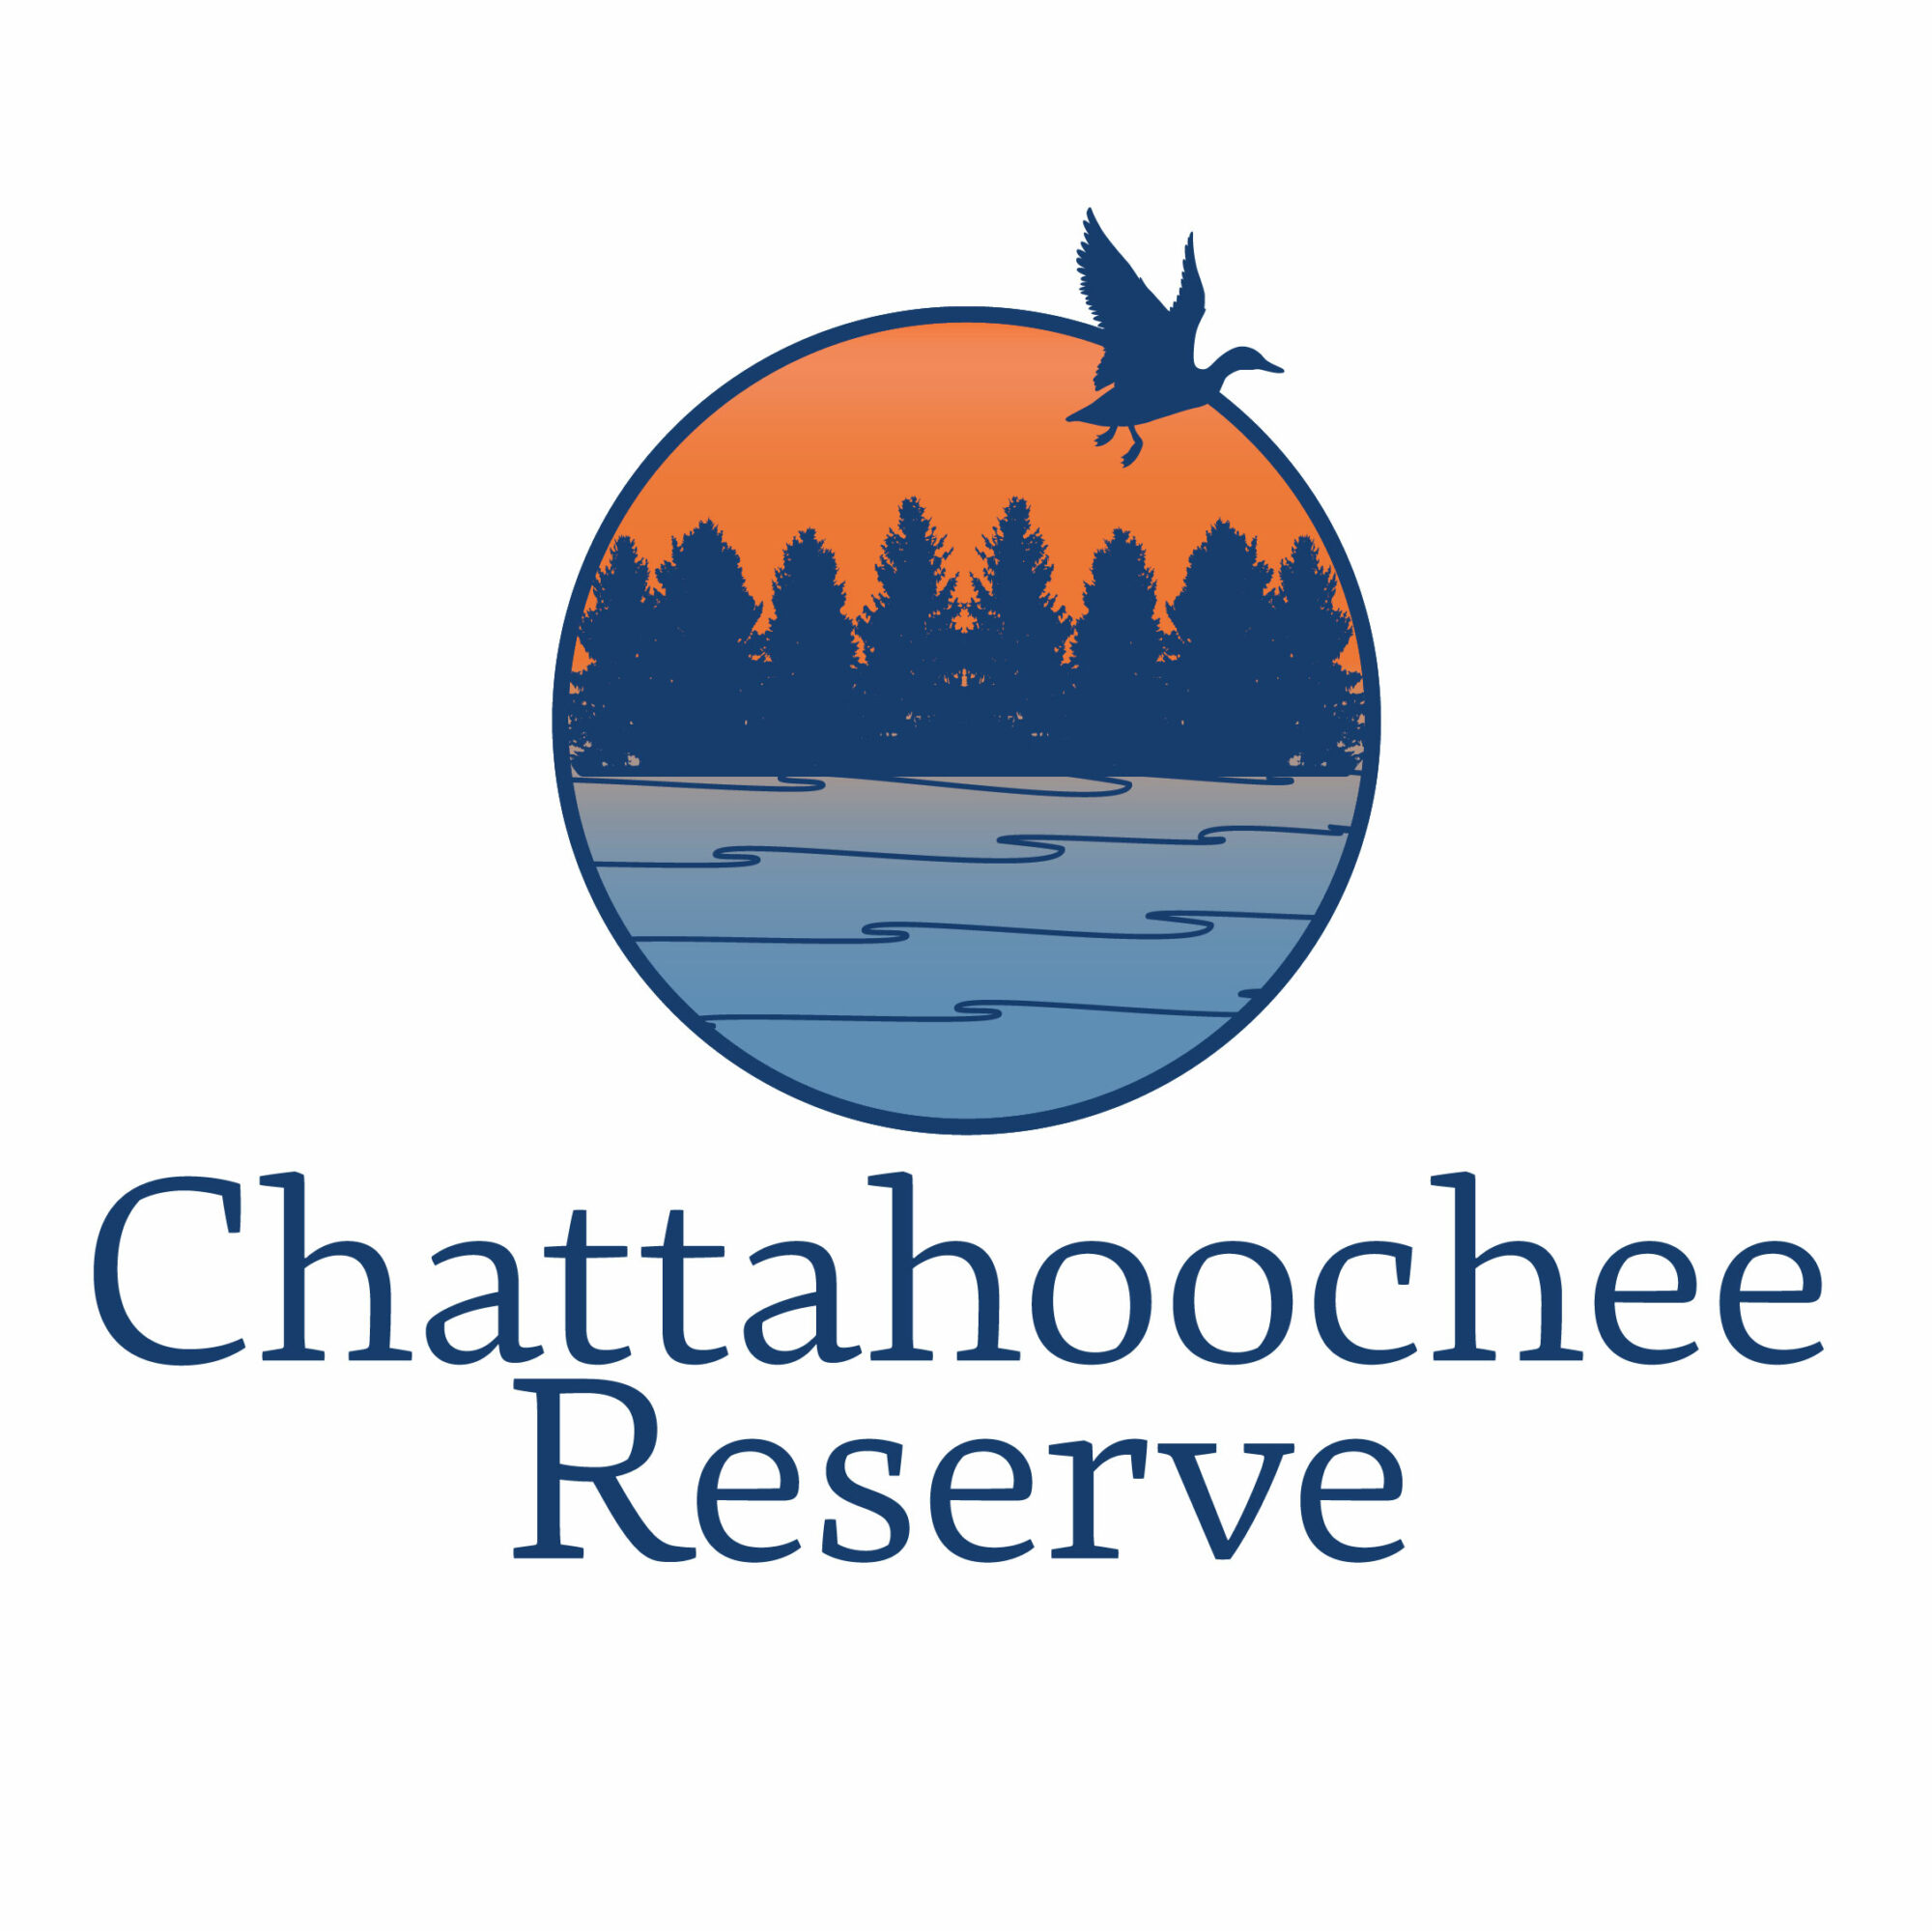 Chattahoochee river logo